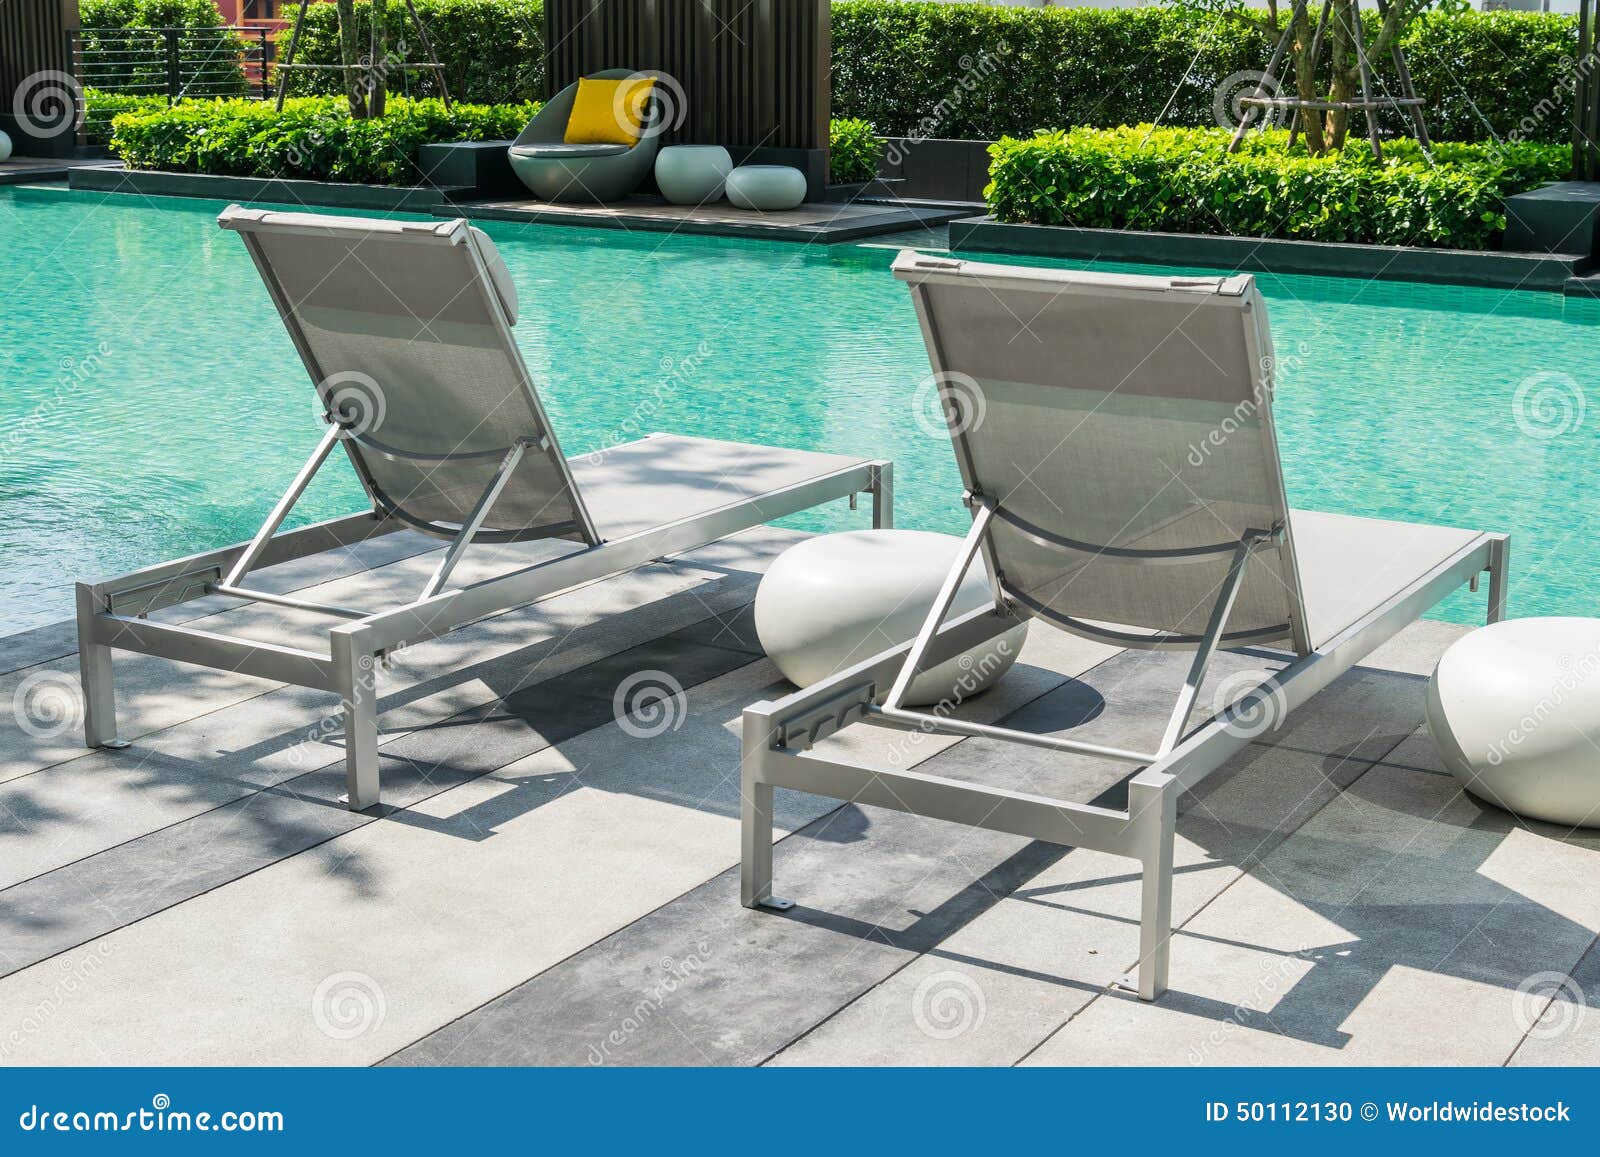 Zwembad ligstoelen stock foto. Image stoel, aqua - 50112130